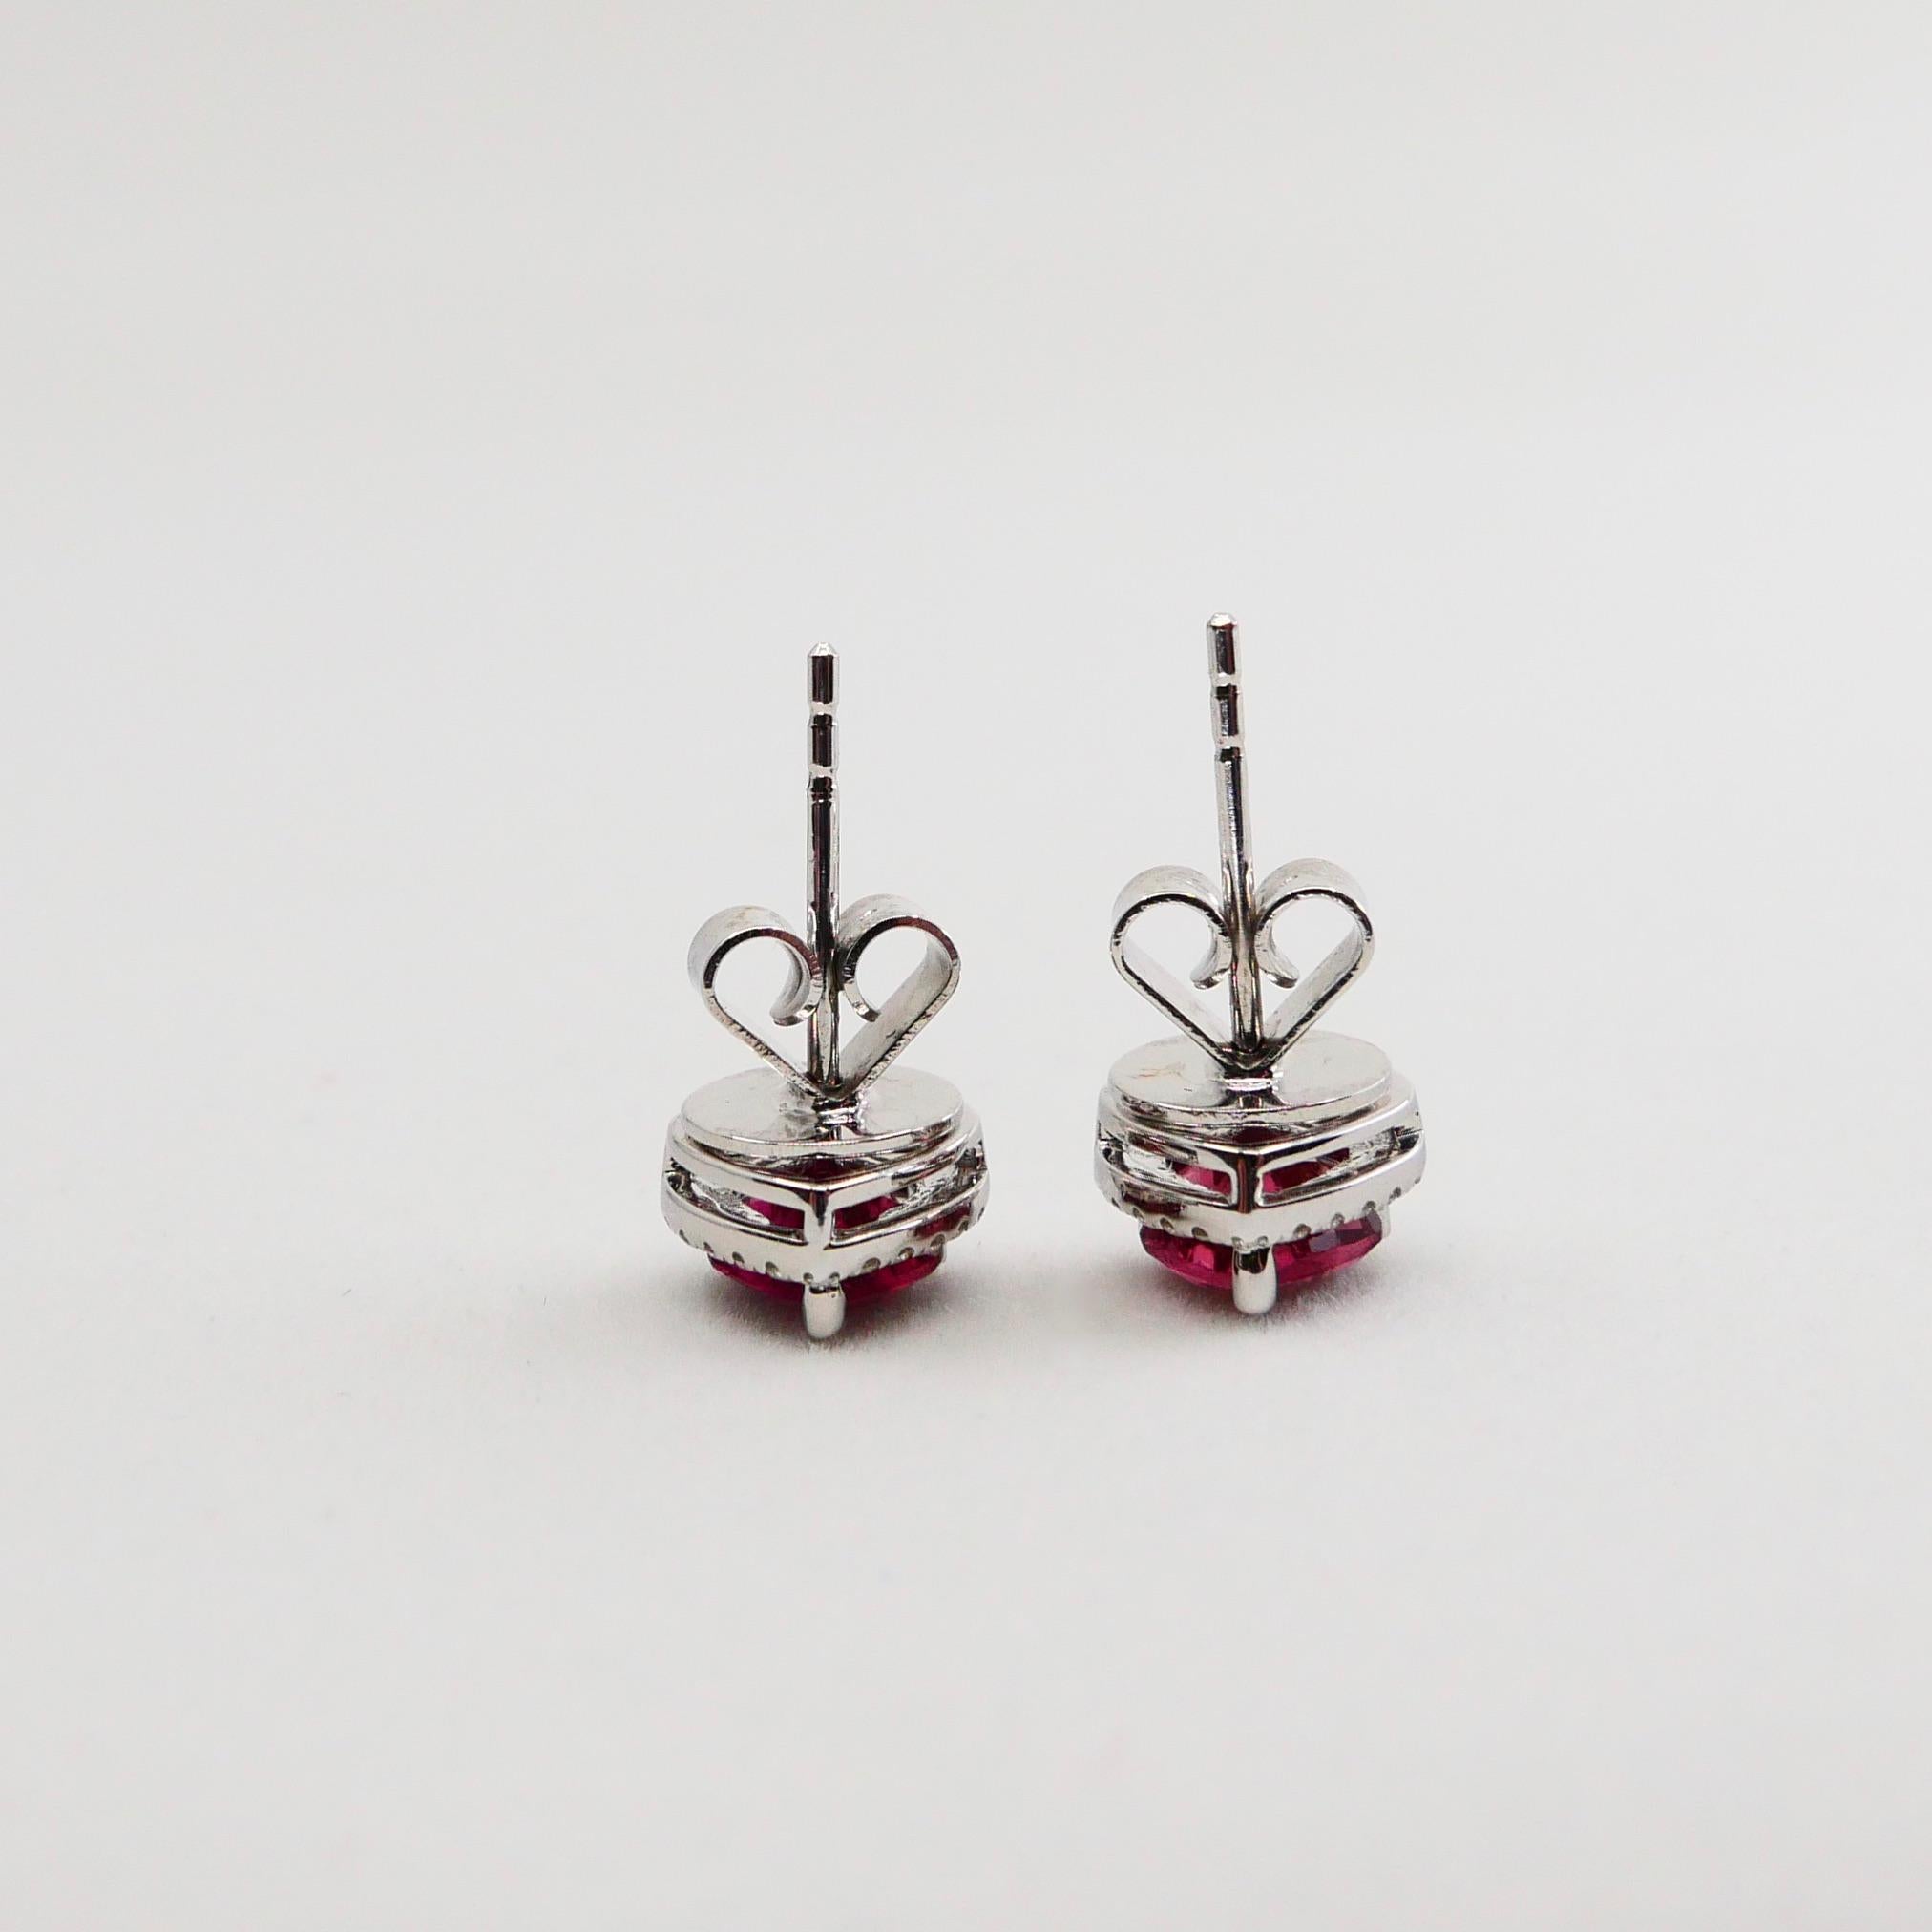 1.37 Carat Heart Shaped Vivid Pink Tourmaline and Diamond Stud Earring For Sale 3